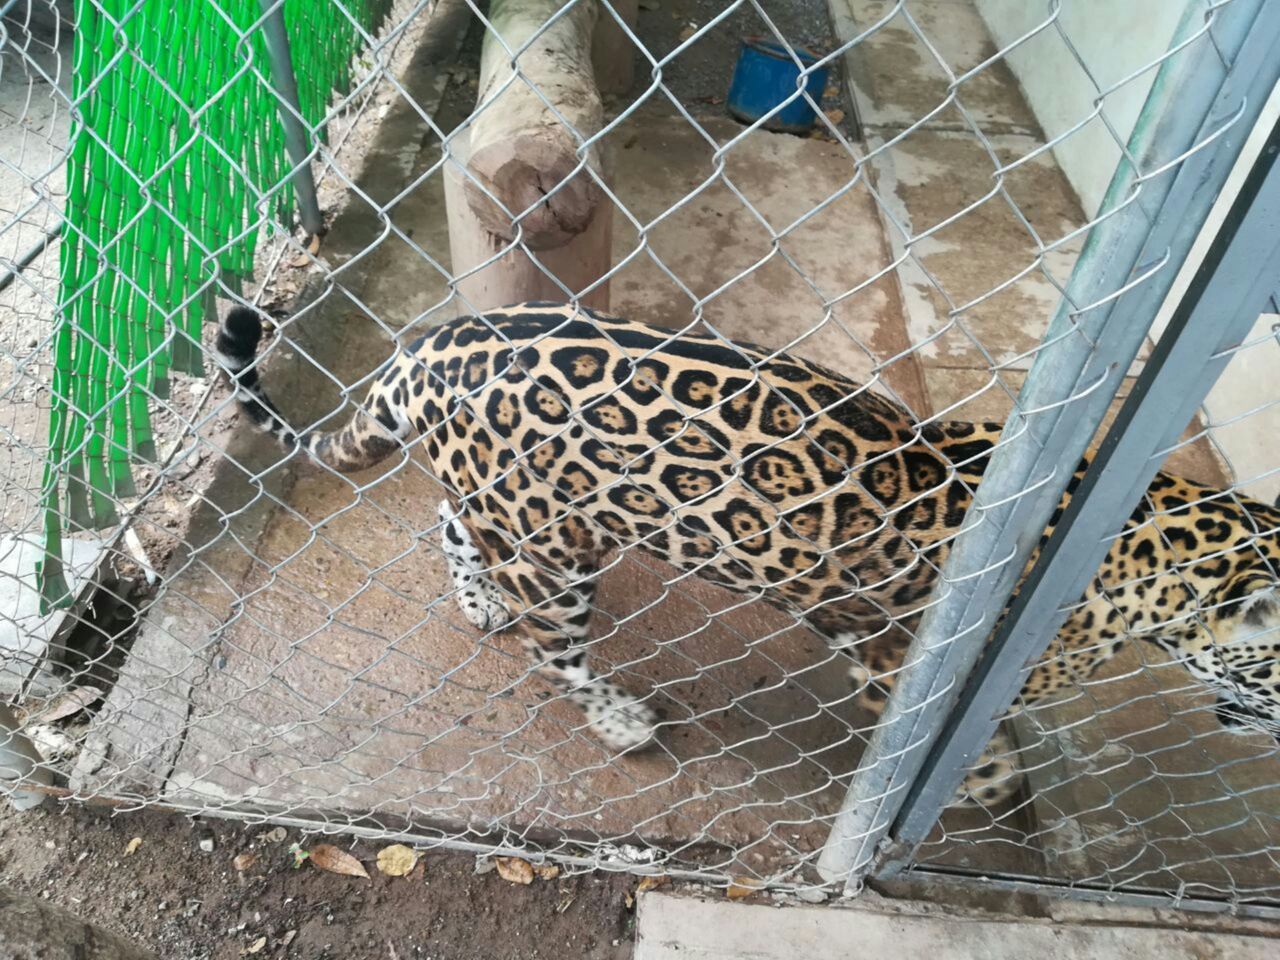 Profepa asegura jaguar en domicilio de Culiacán 